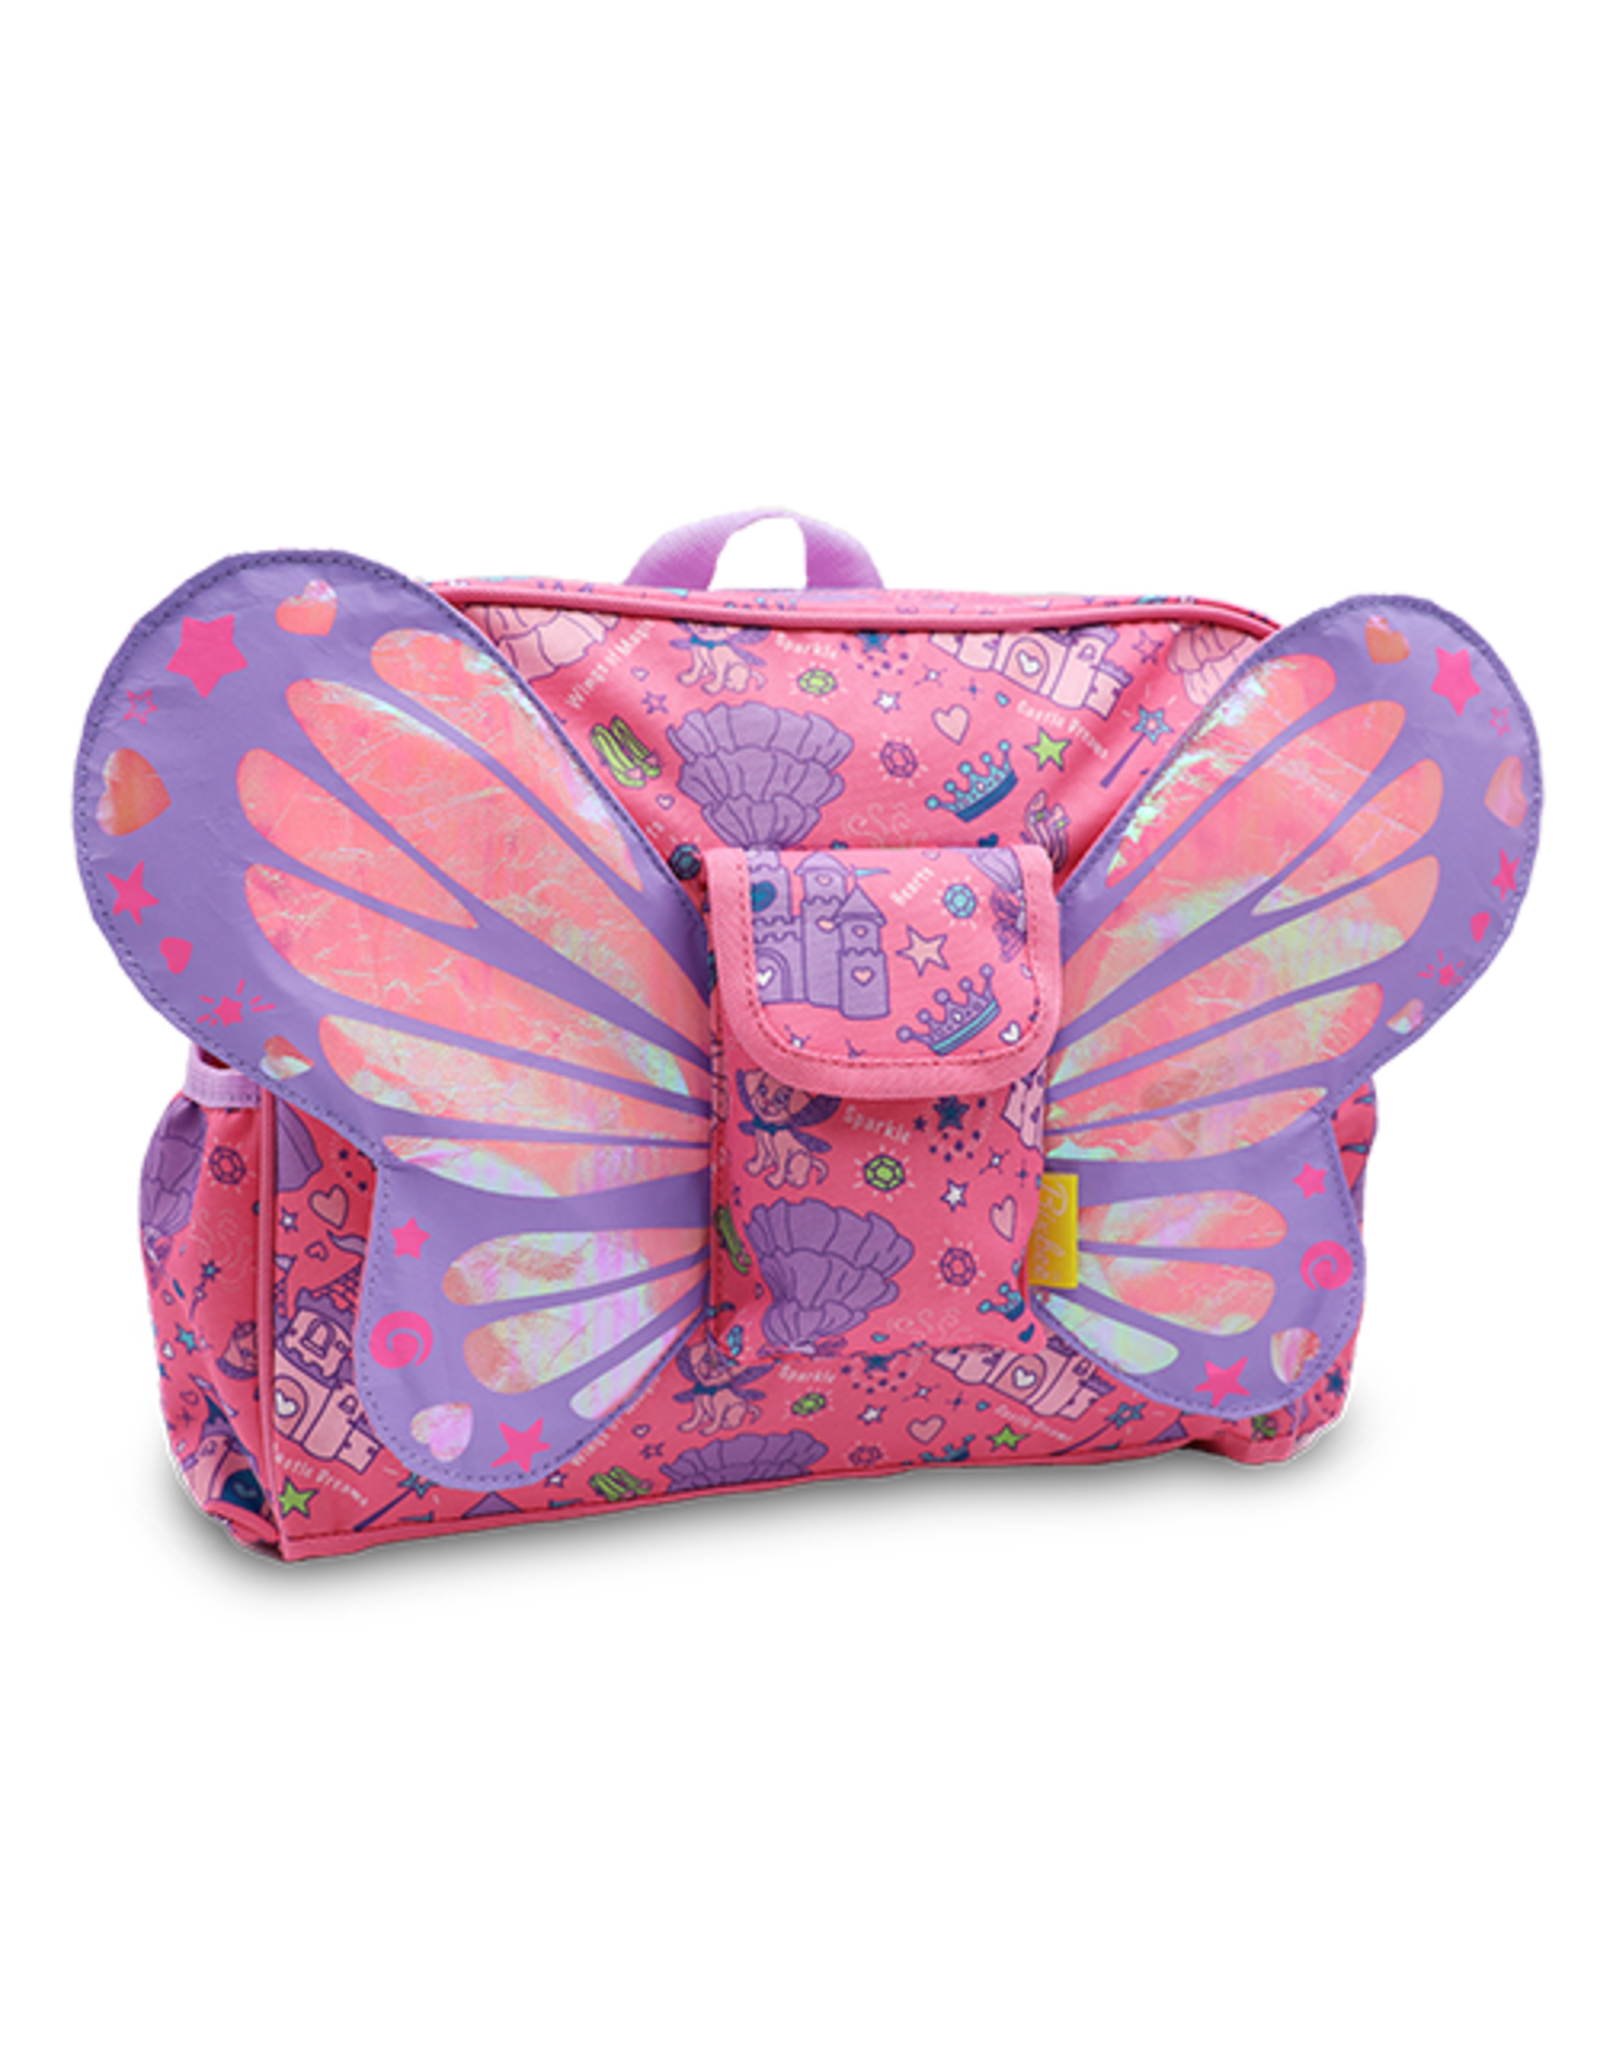 Bixbee Princess Fairy Flyer with wings